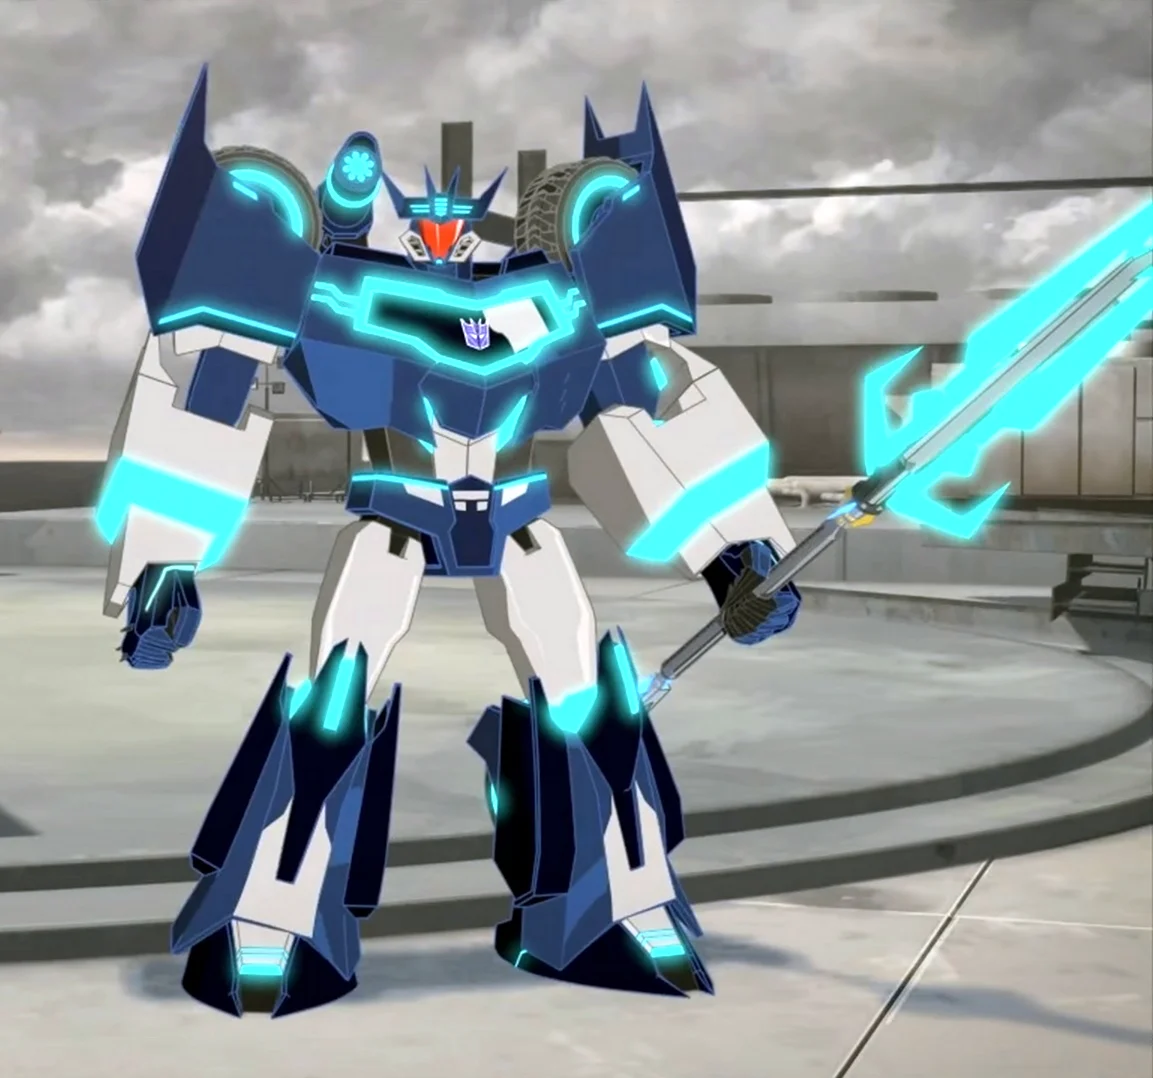 Transformers Robots in Disguise Саундвейв. Картинка из мультфильма